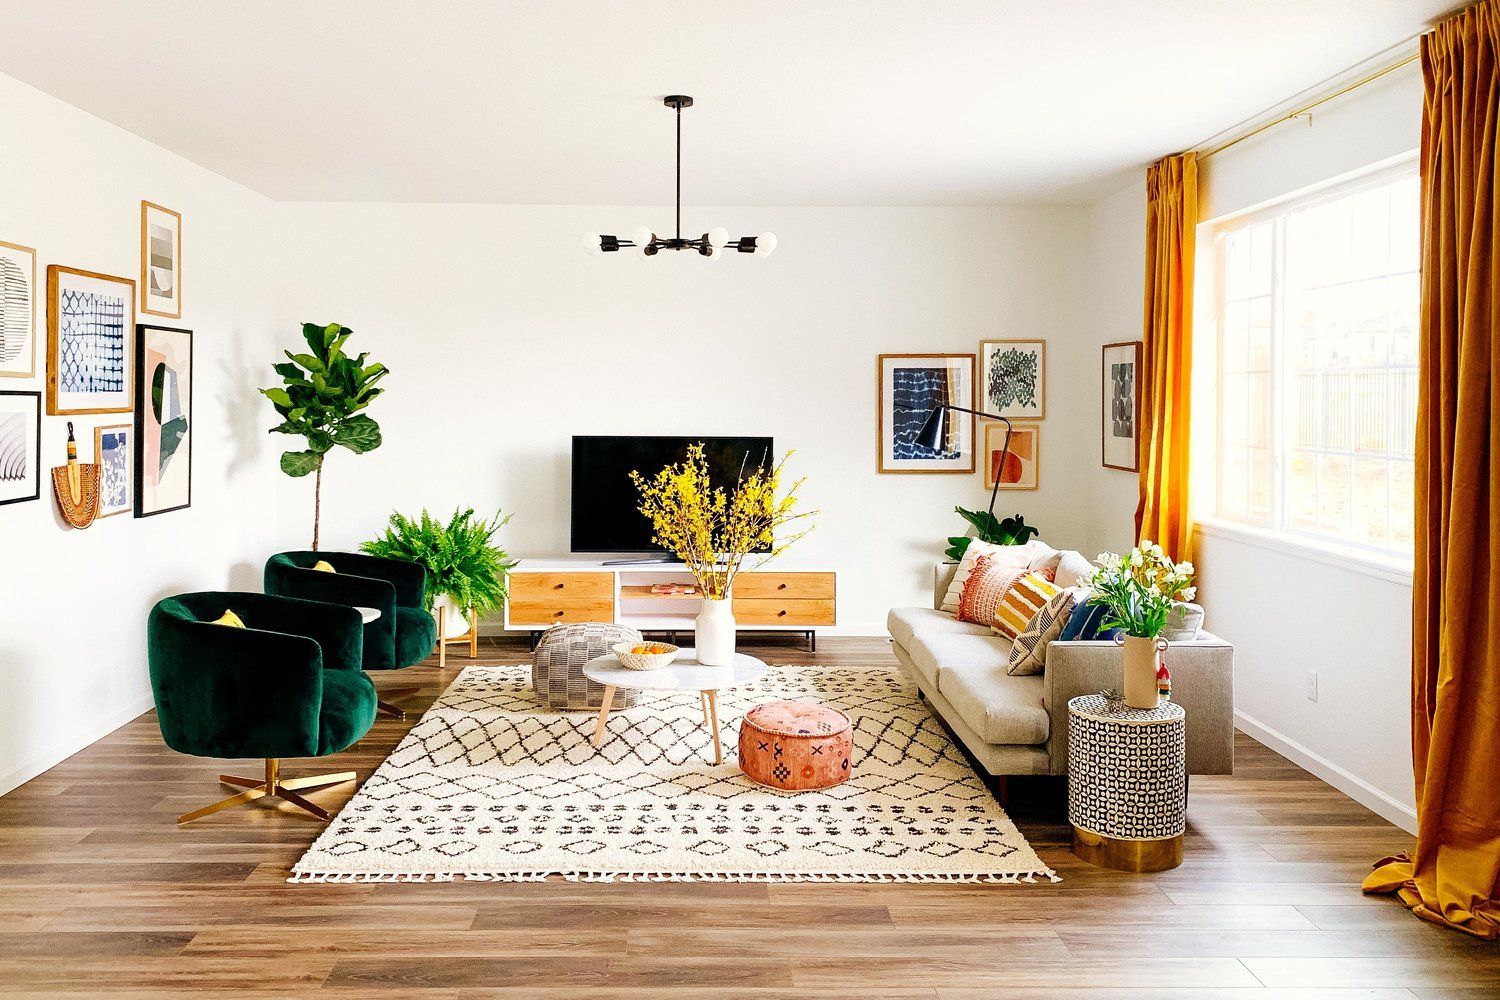 14 living room decor Colorful ideas